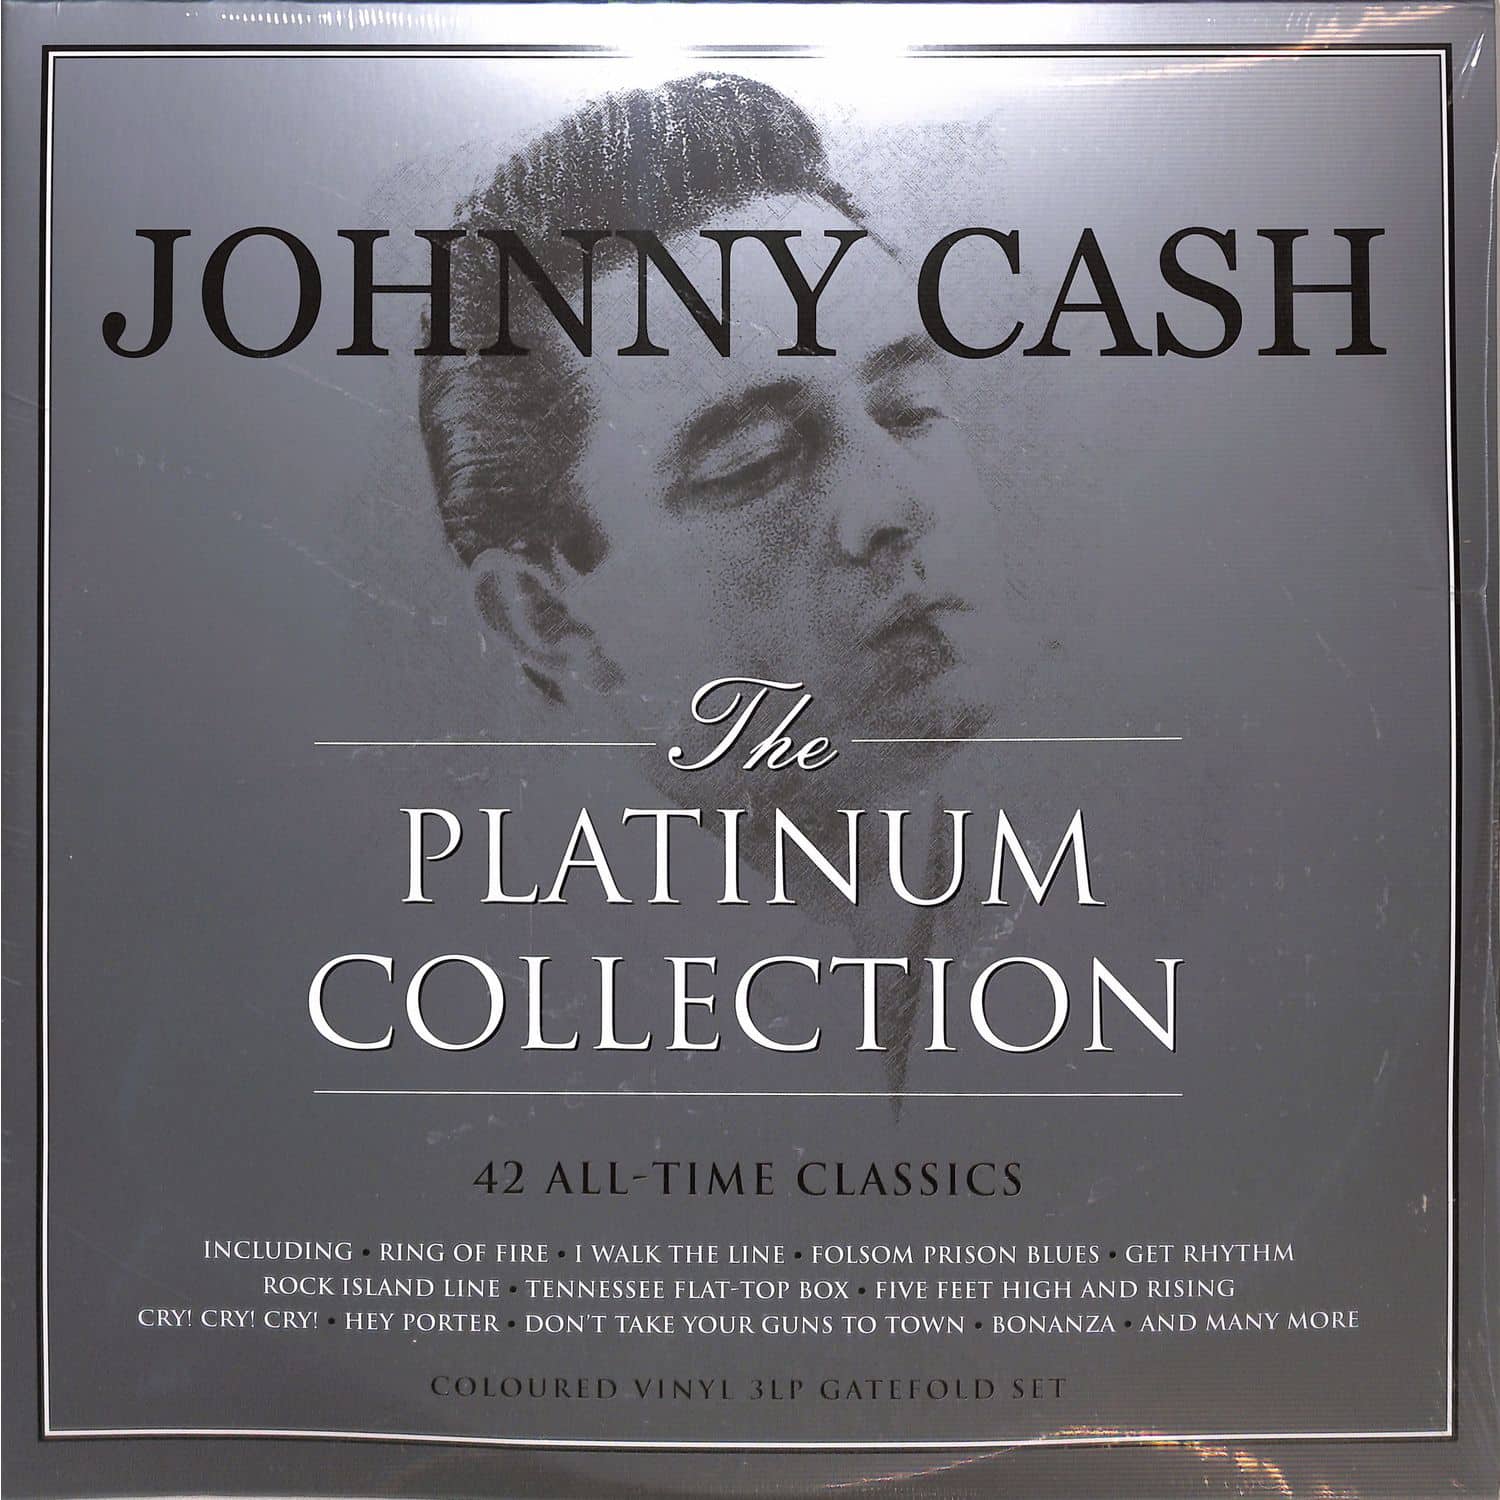 Johnny Cash - PLATINUM COLLECTION 